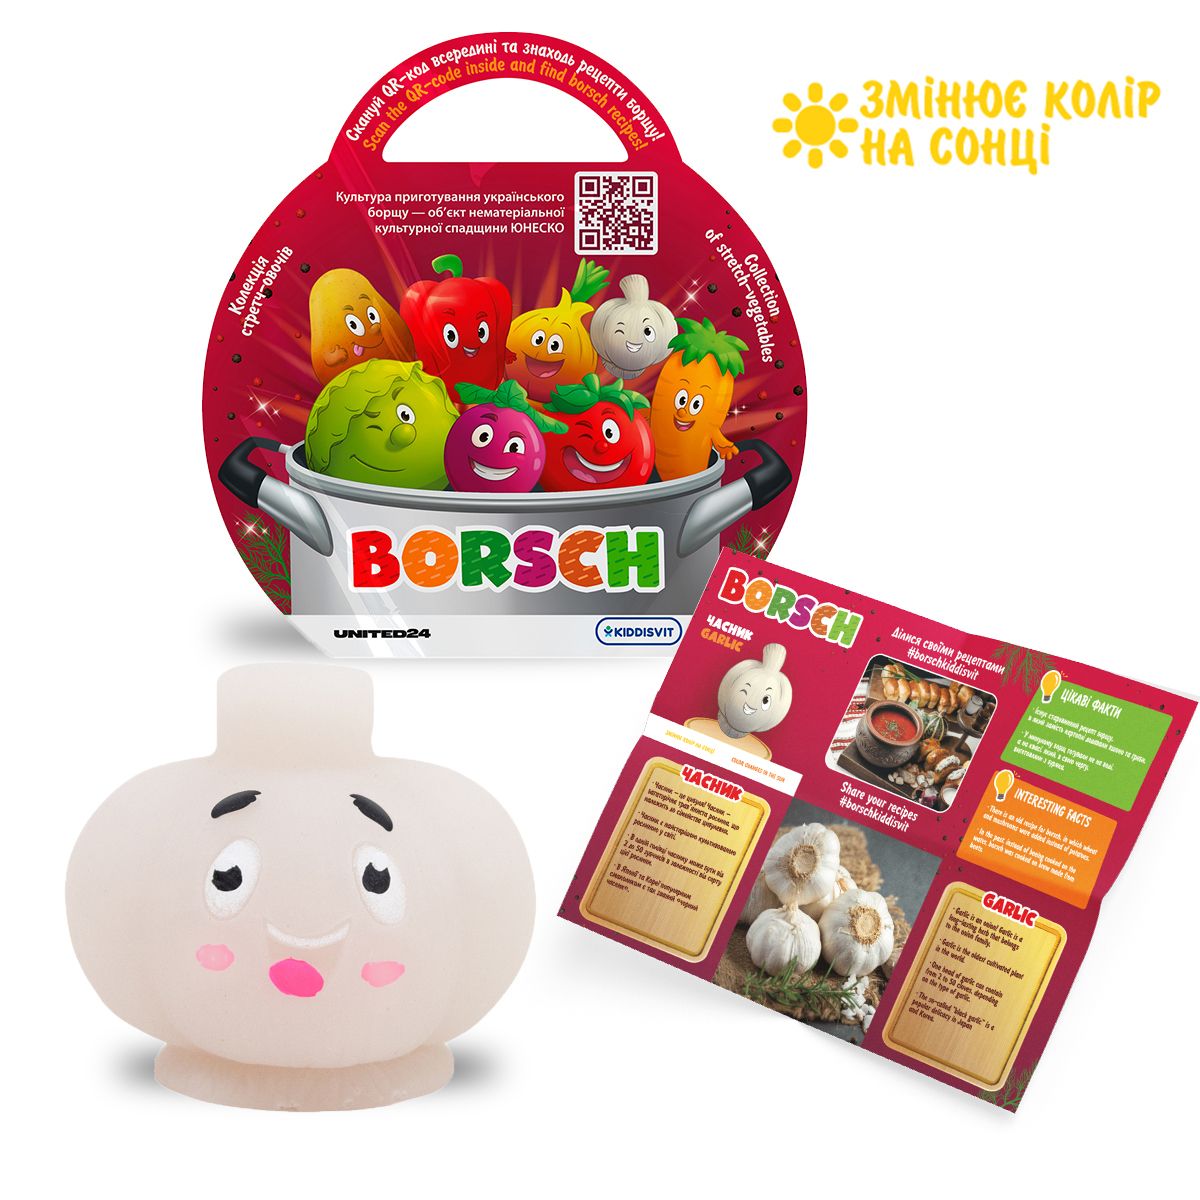 Стретч-игрушка в виде овоща – Borsch